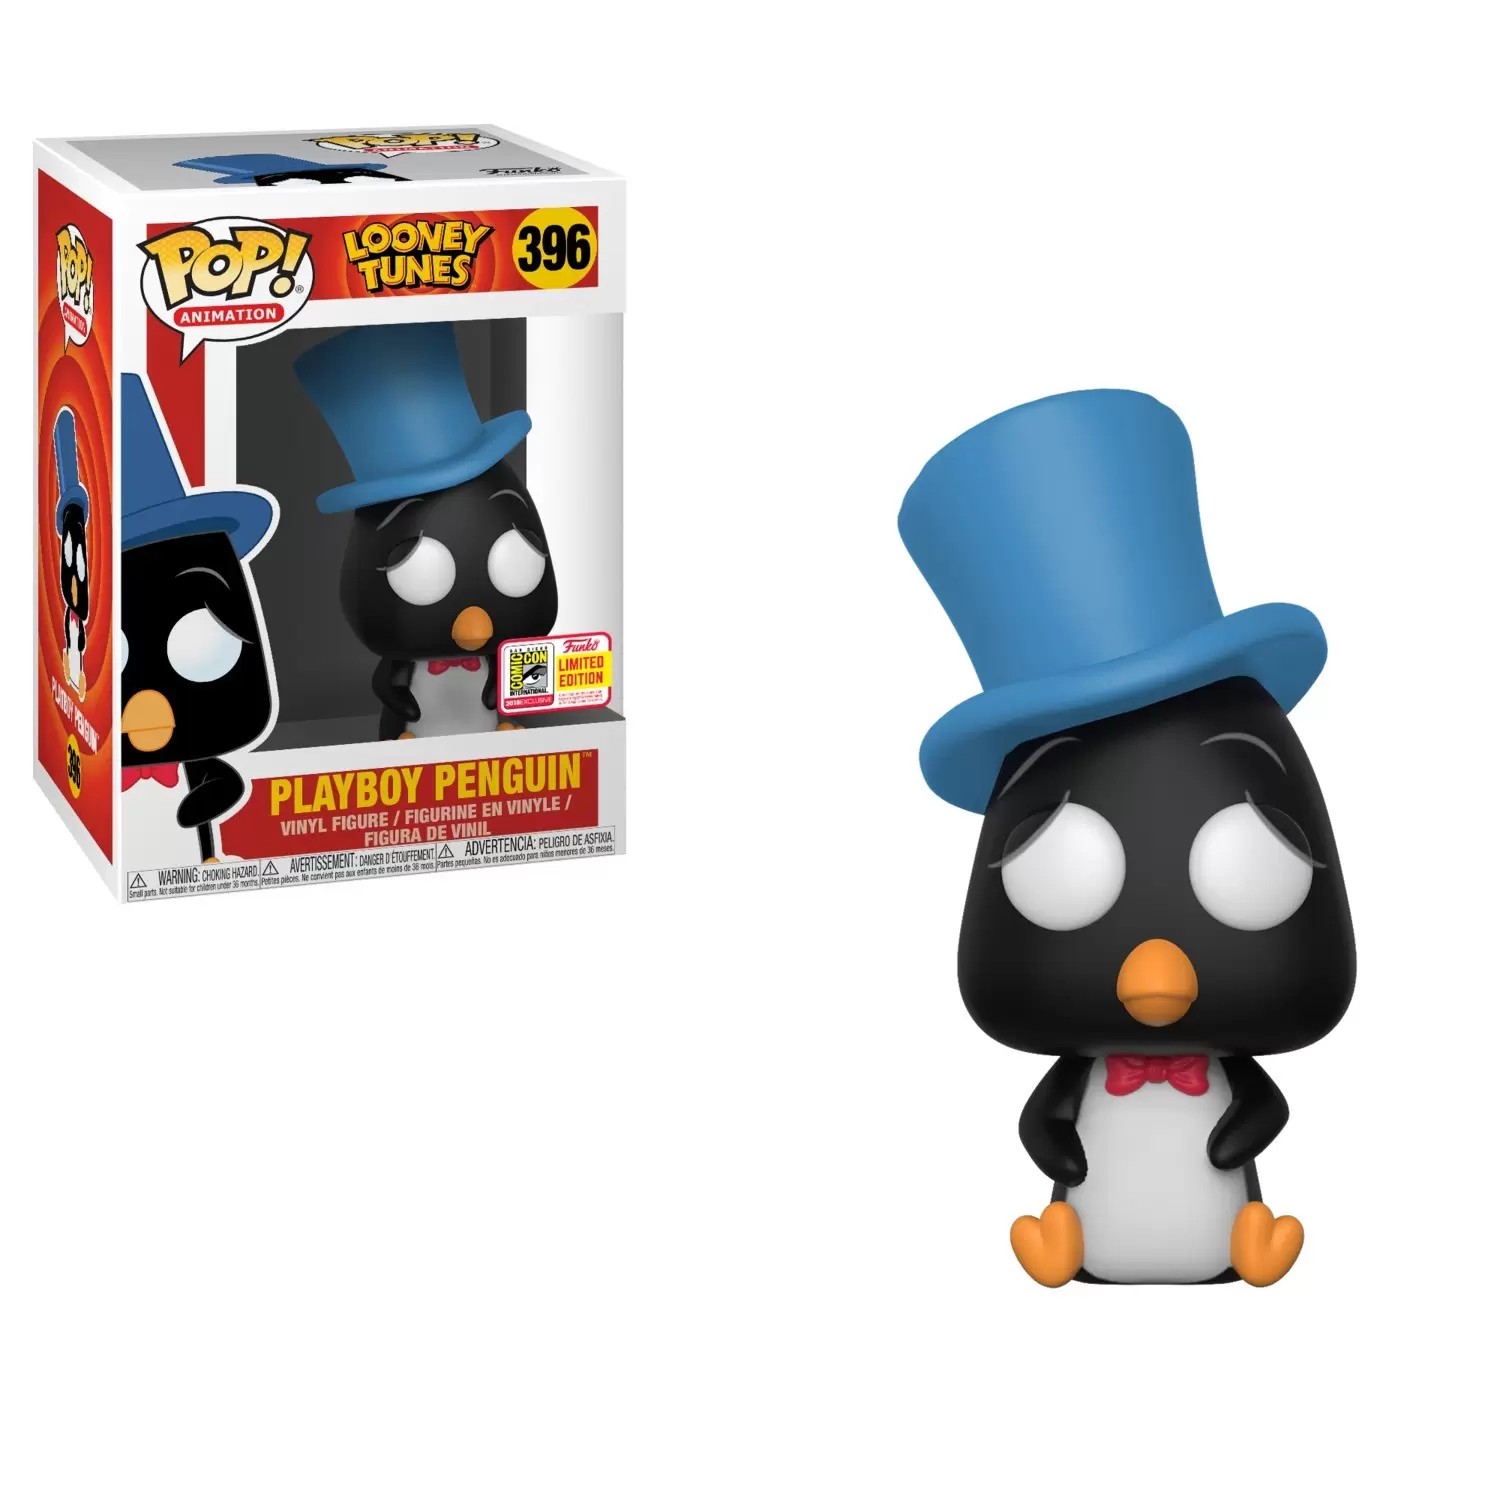 POP! Animation - Looney Tunes - Playboy Penguin